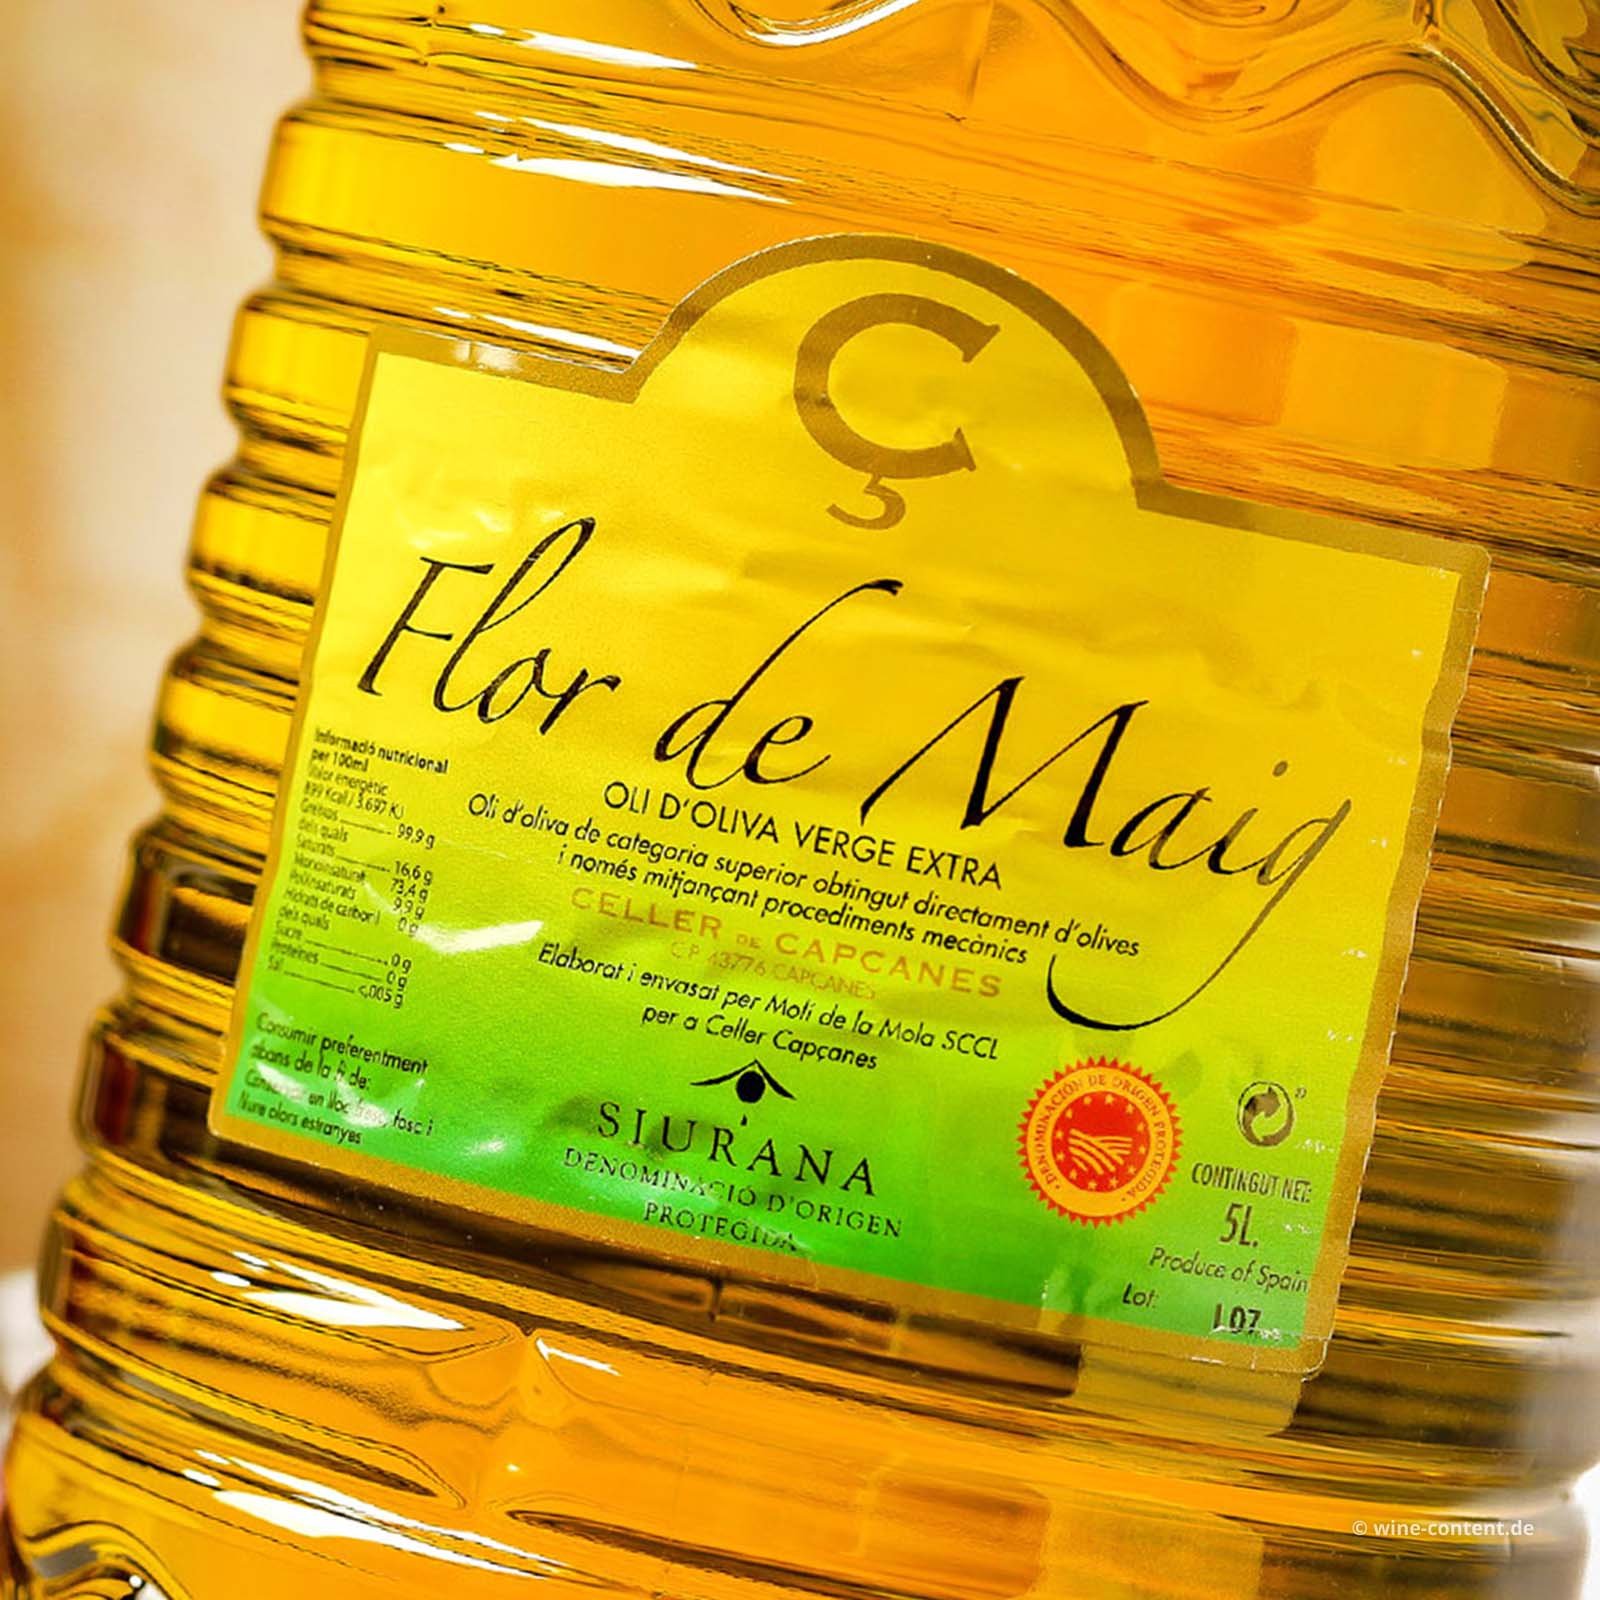 5,0 L Olivenöl Verge Extra Flor de Maig